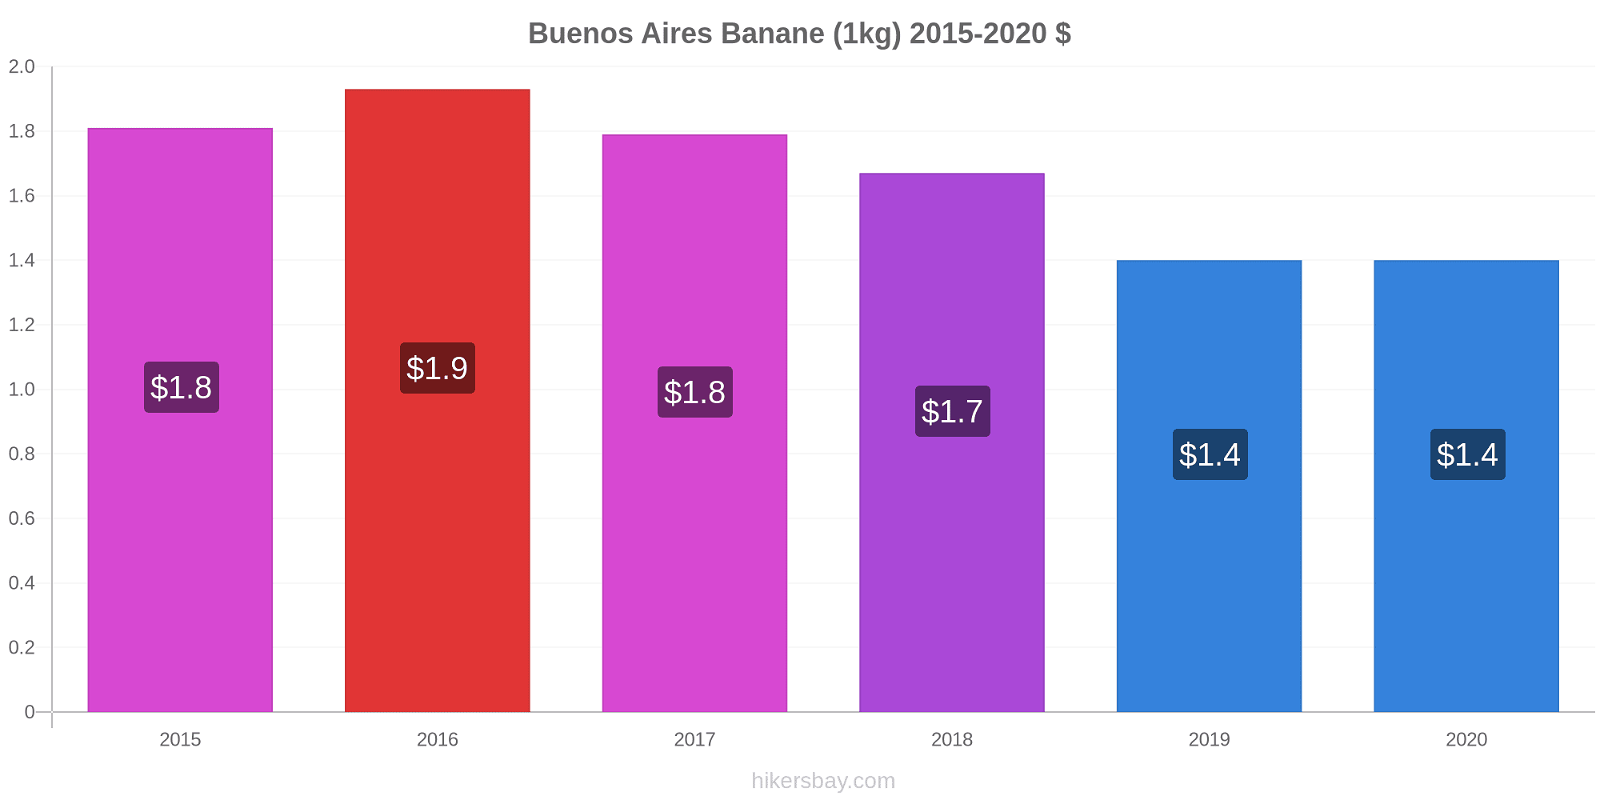 Buenos Aires variazioni di prezzo Banana (1kg) hikersbay.com